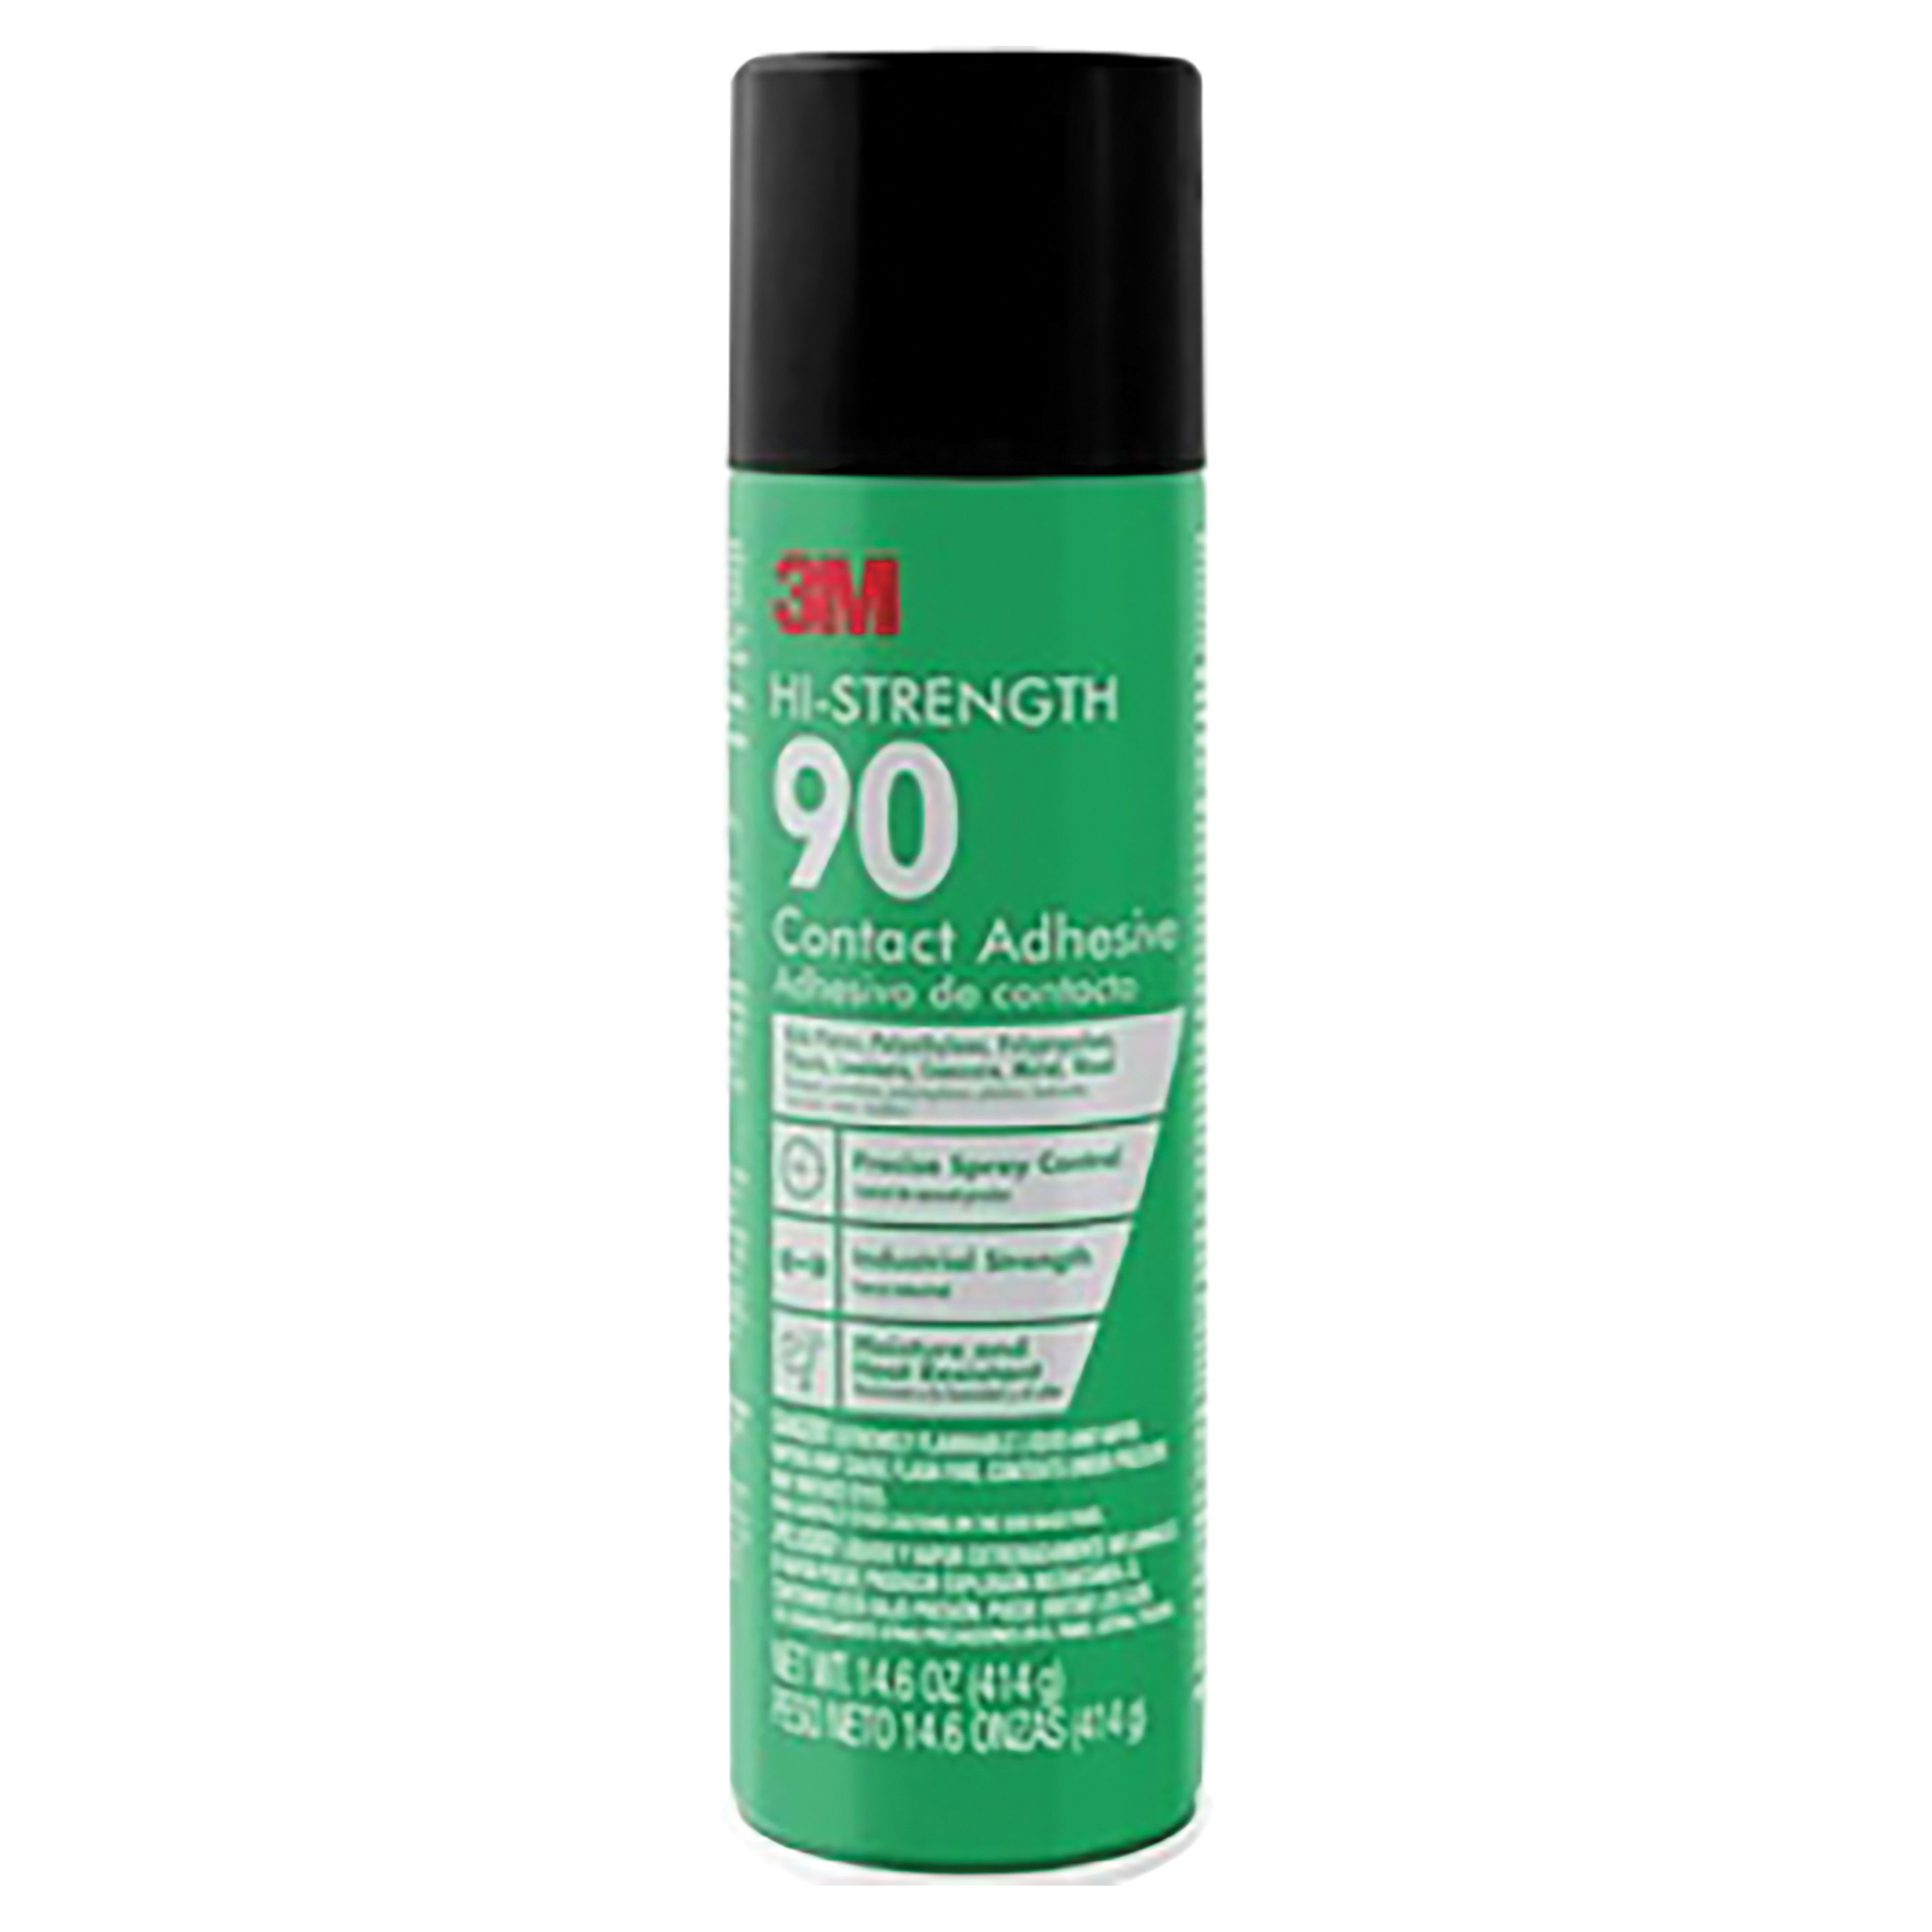 90-DSC Spray Adhesive, Fruity, Sweet, Colorless, 14.6 oz Aerosol Can